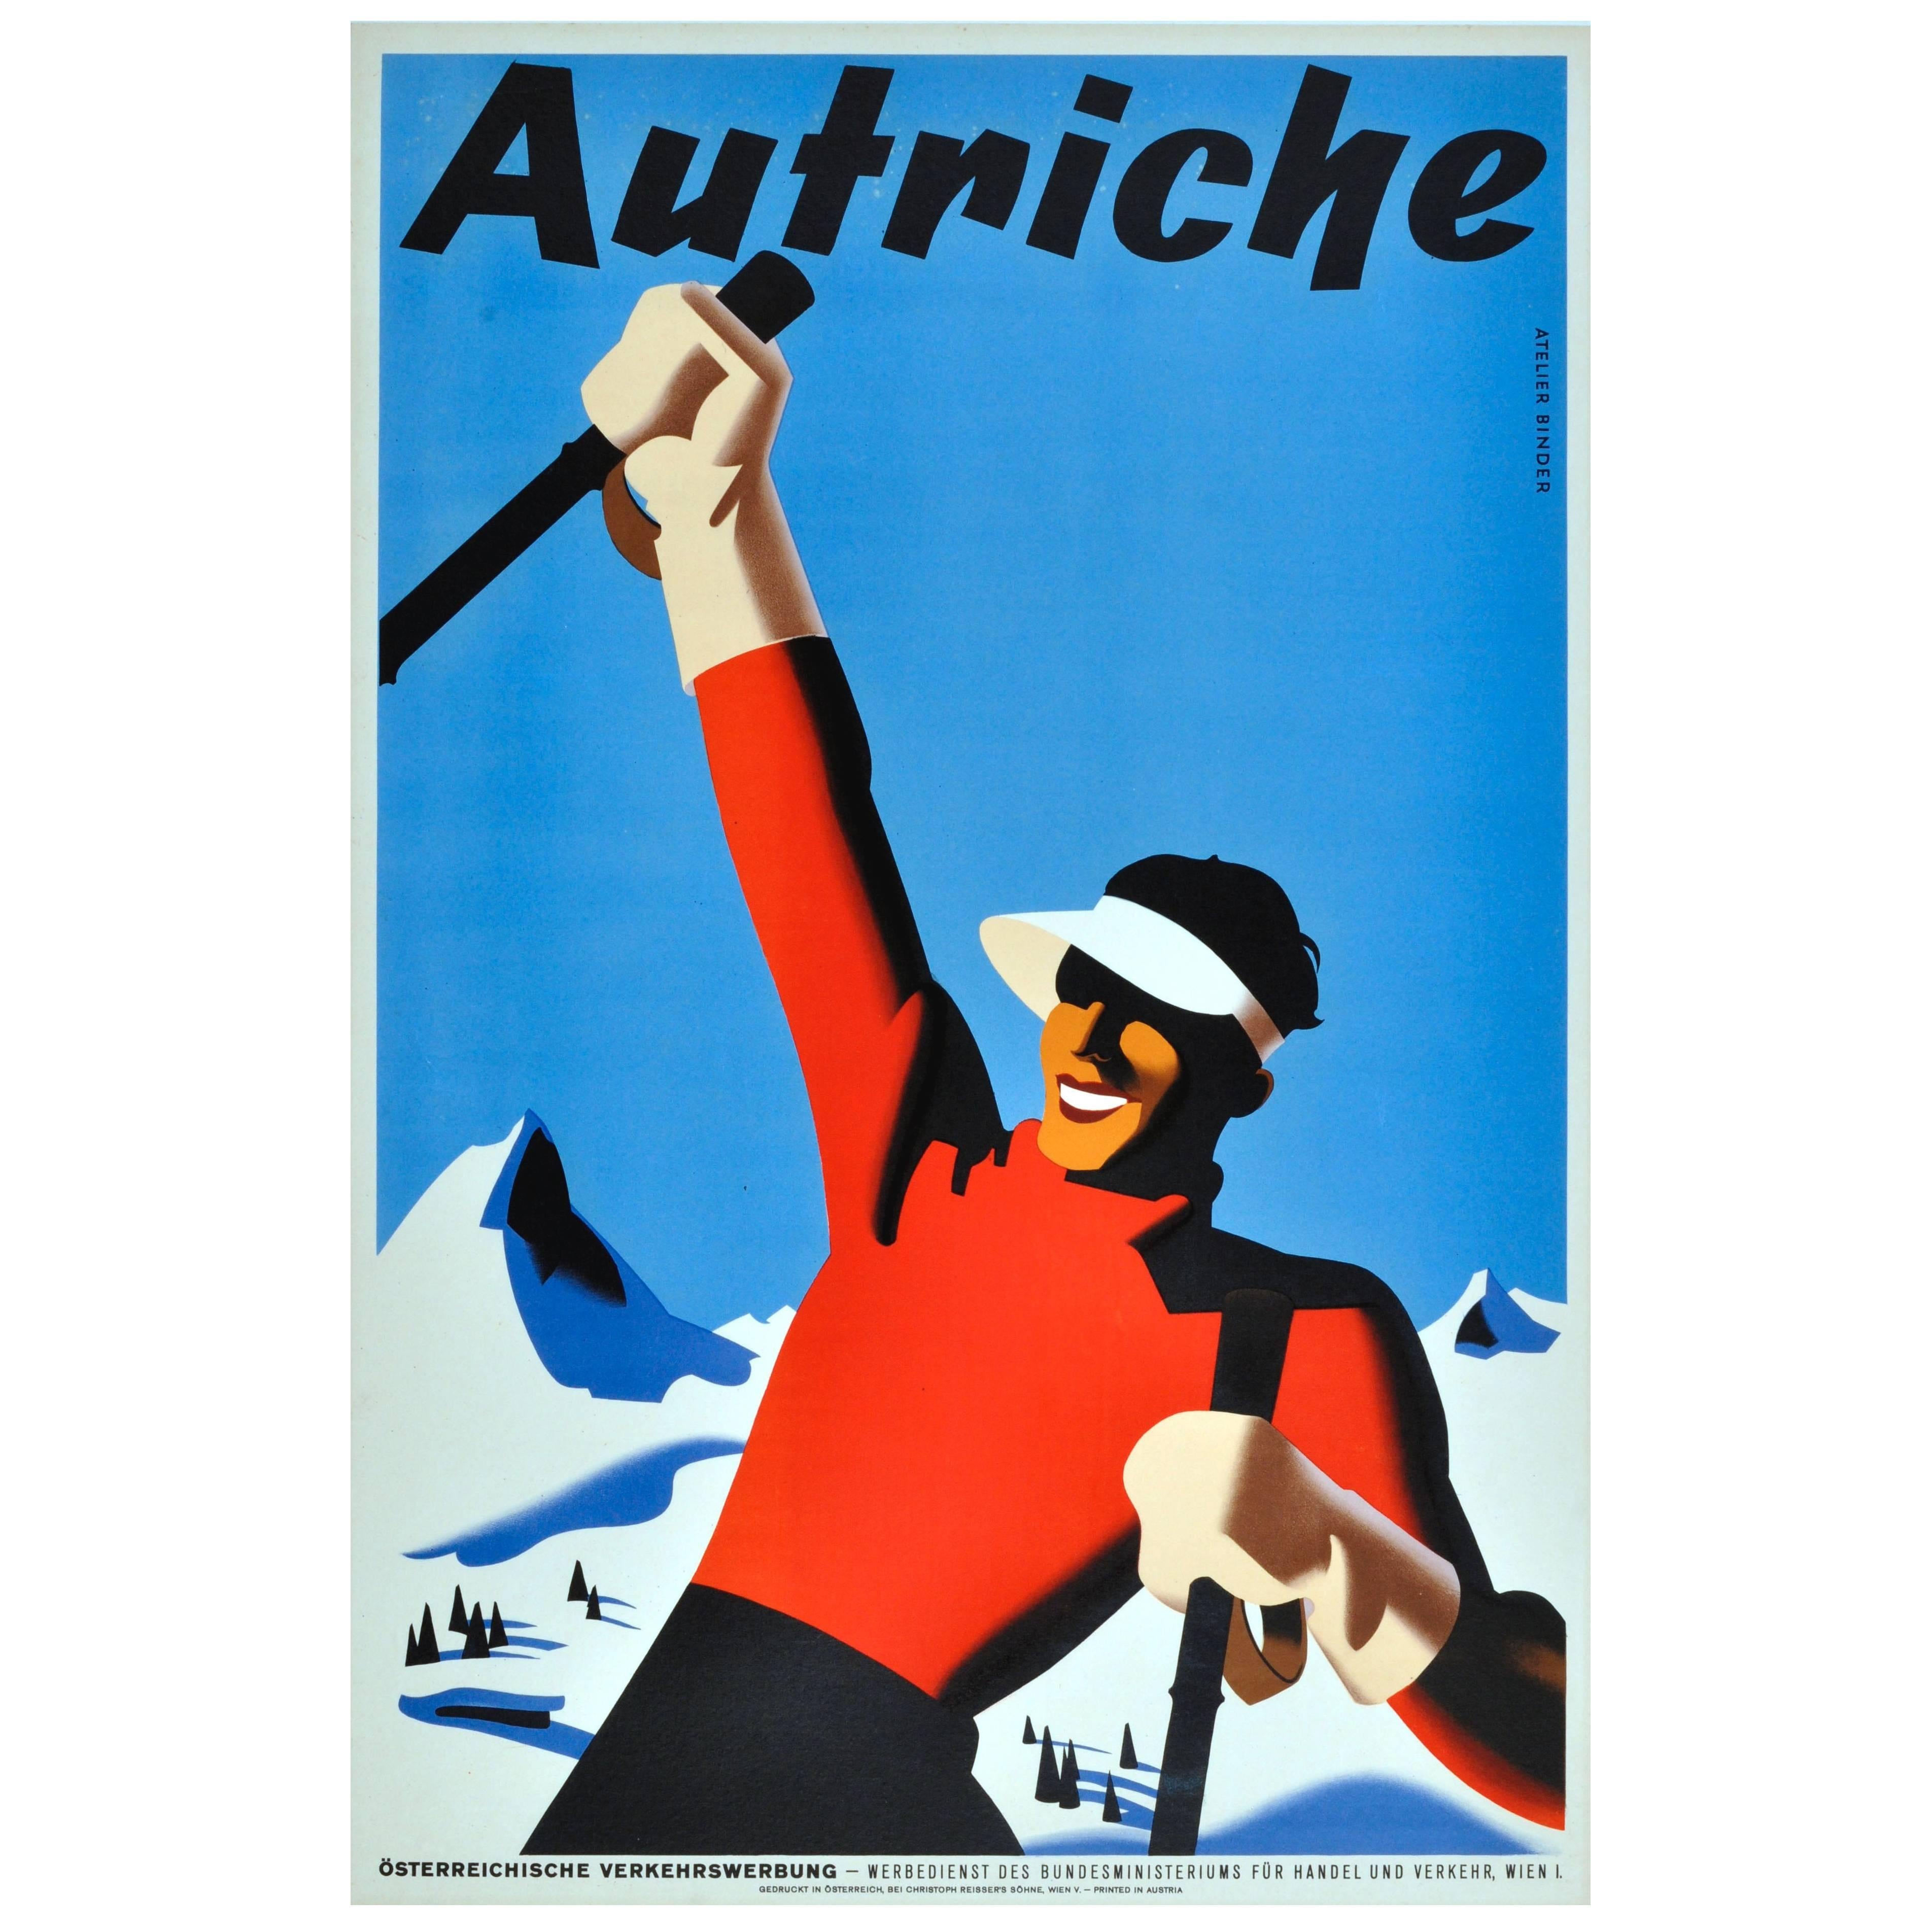 Original Vintage Winter Sport Skiing Poster For Autriche Austria Skier Mountains